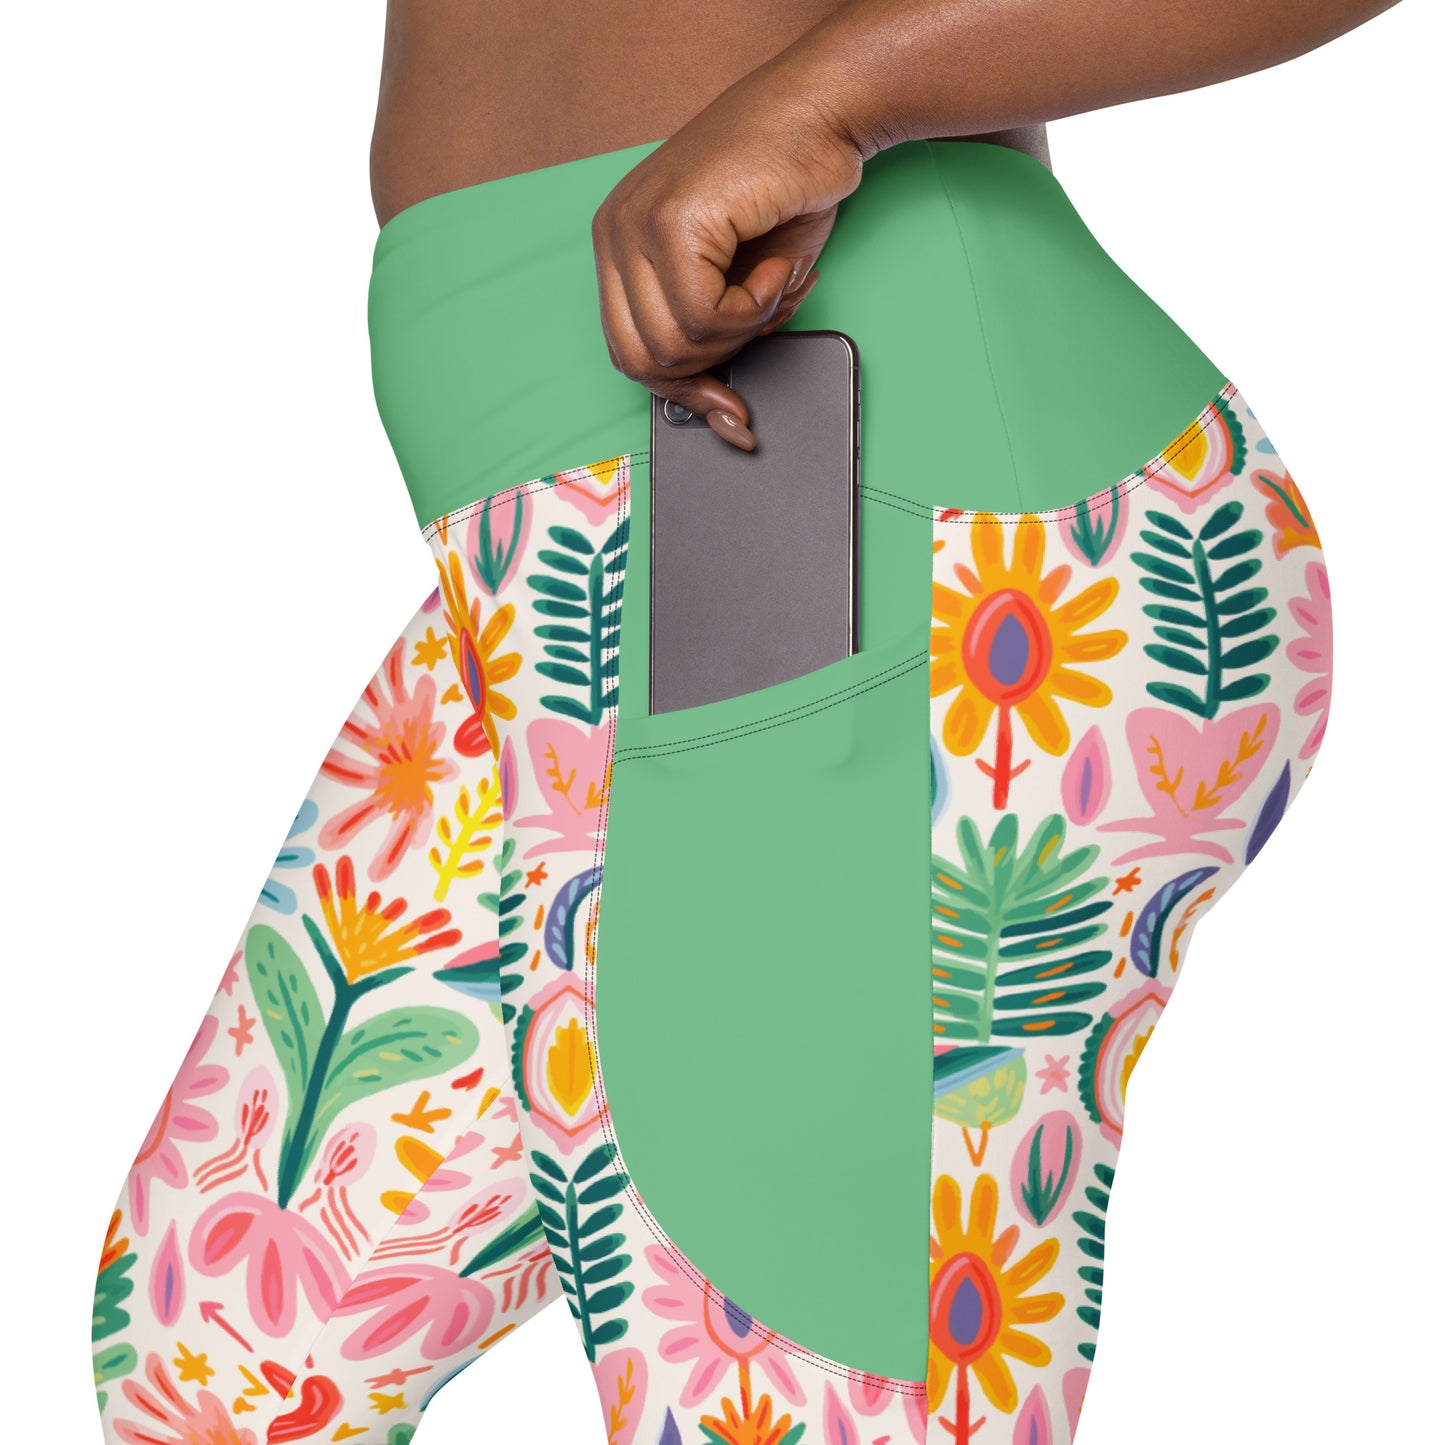 Marbella High Waist 7/8 Recycled Yoga Leggings / Yoga Pants with Pockets